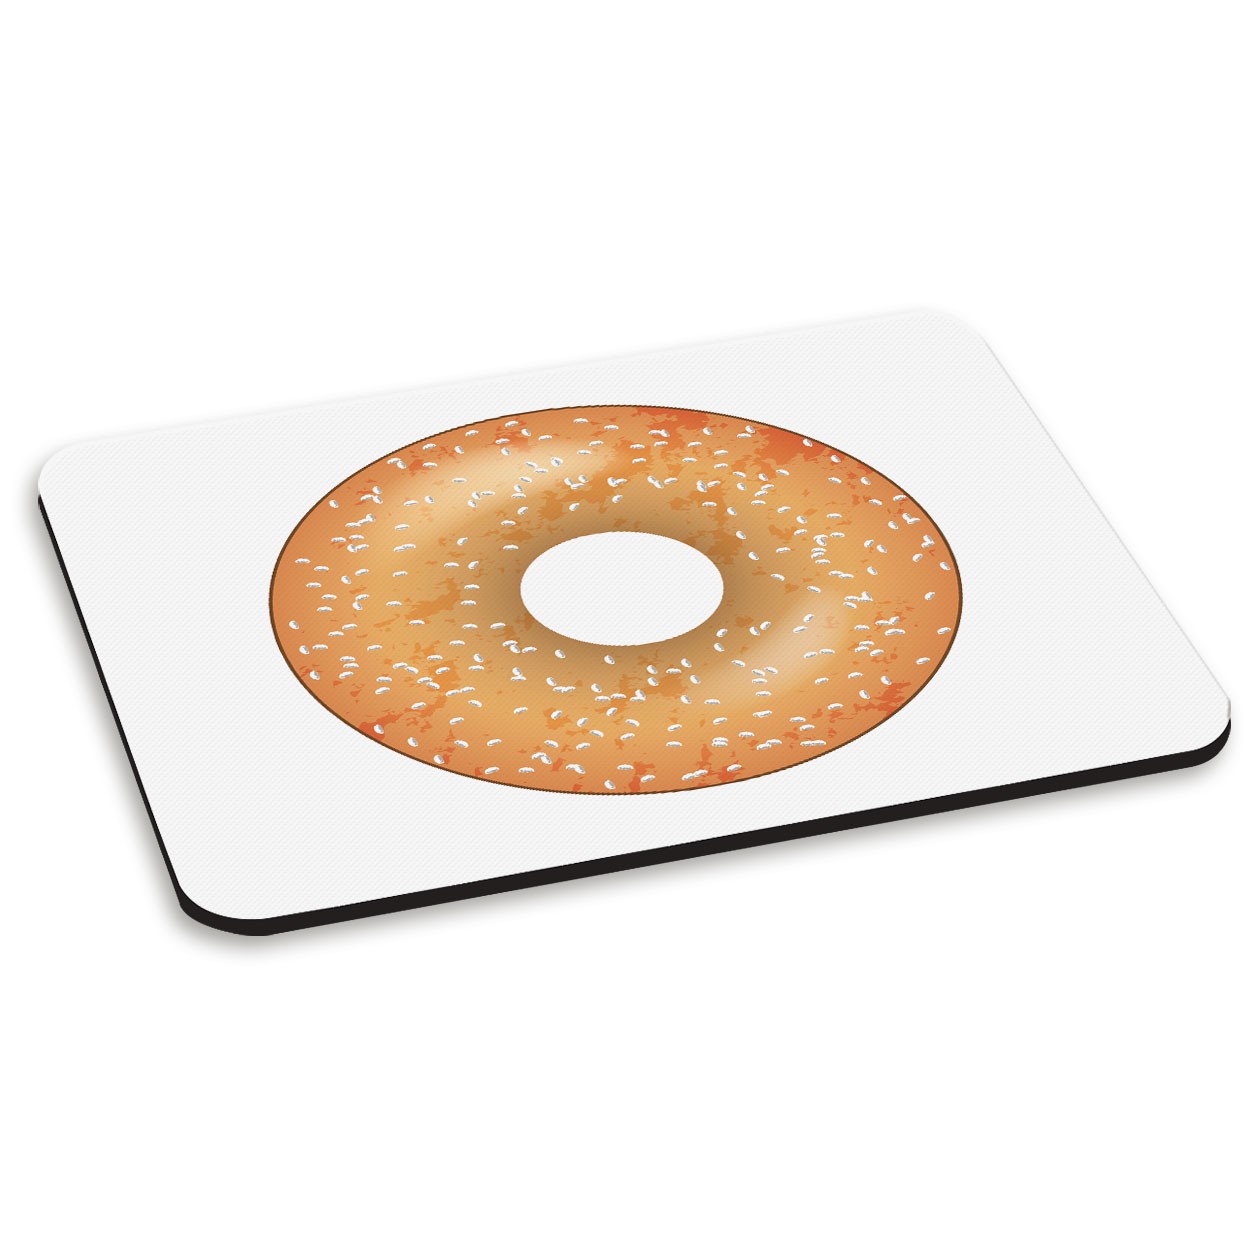 Sprinkled Glazed Doughnut Donut PC Computer Mouse Mat Pad